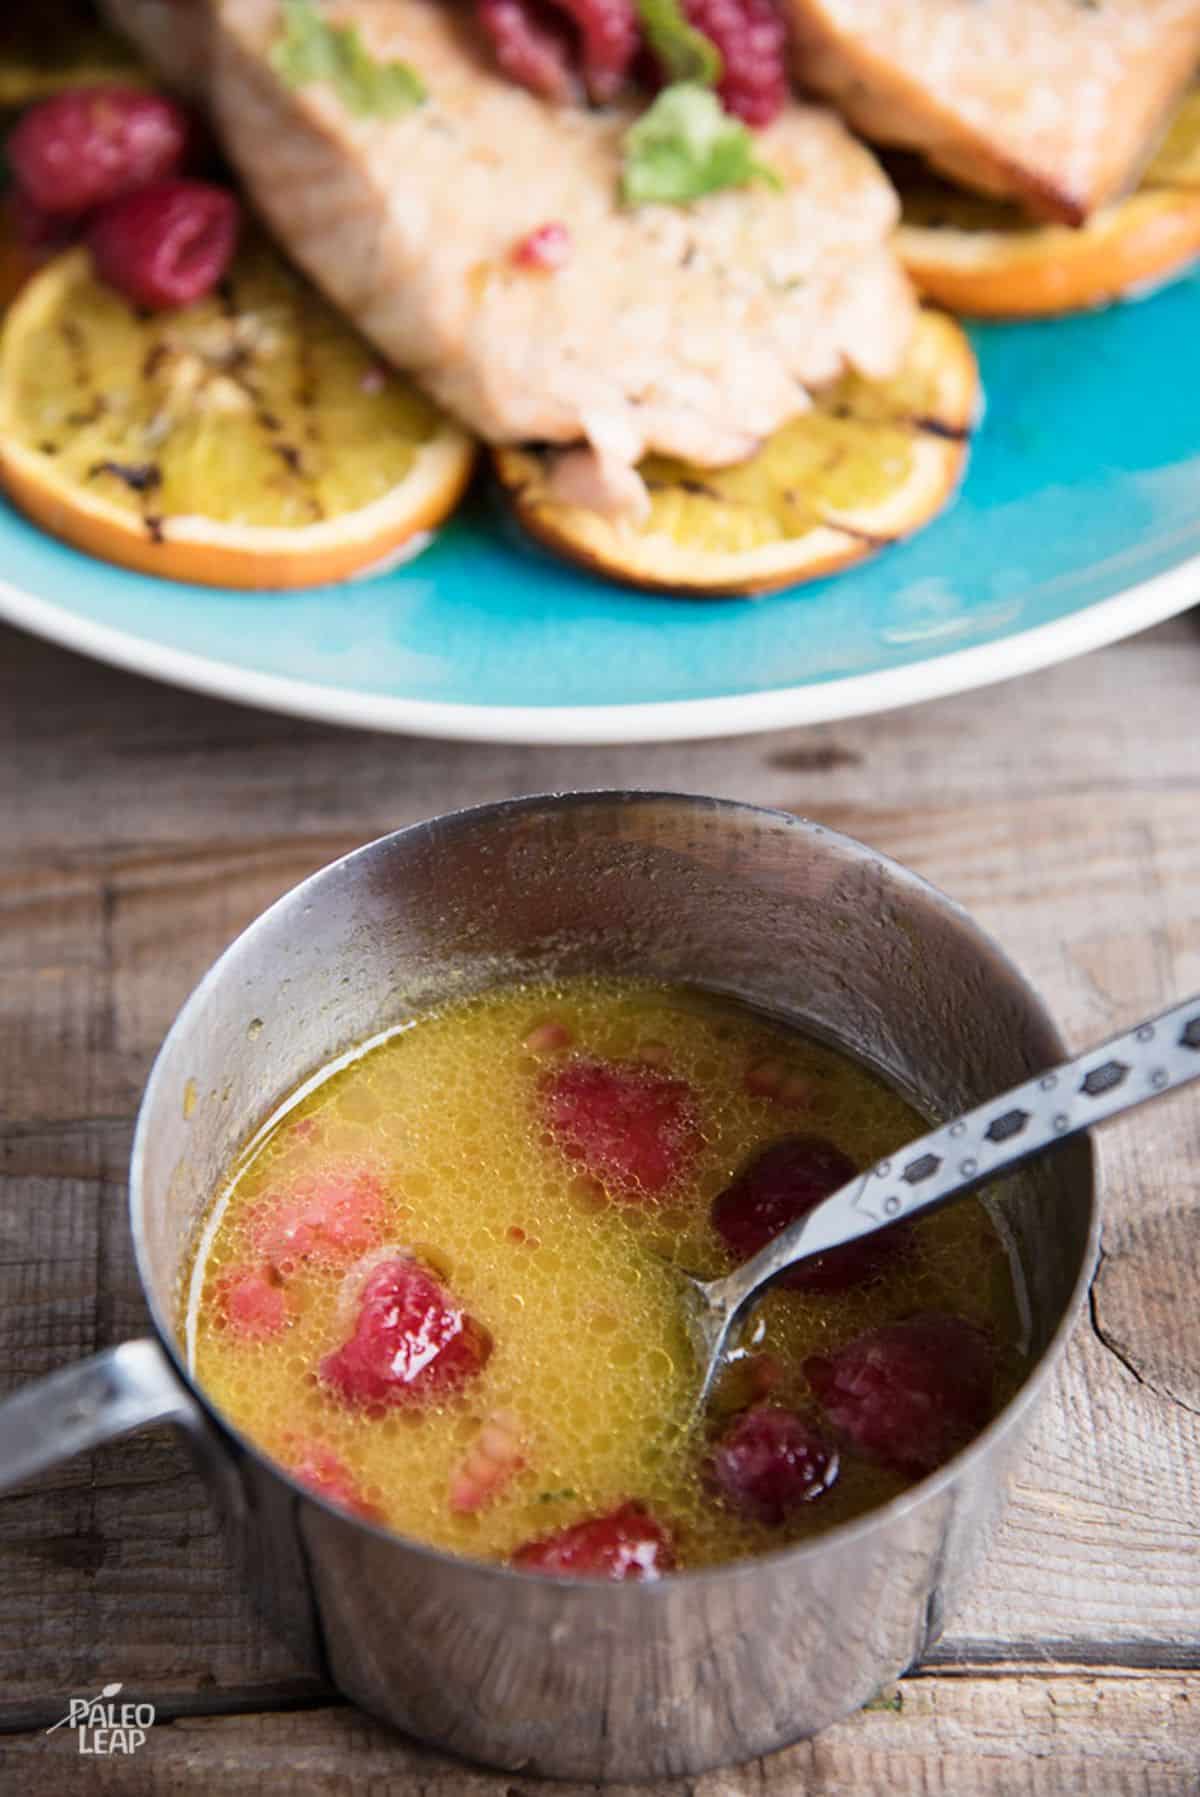 Salmon Fillets With Orange-Raspberry Sauce Recipe Preparation